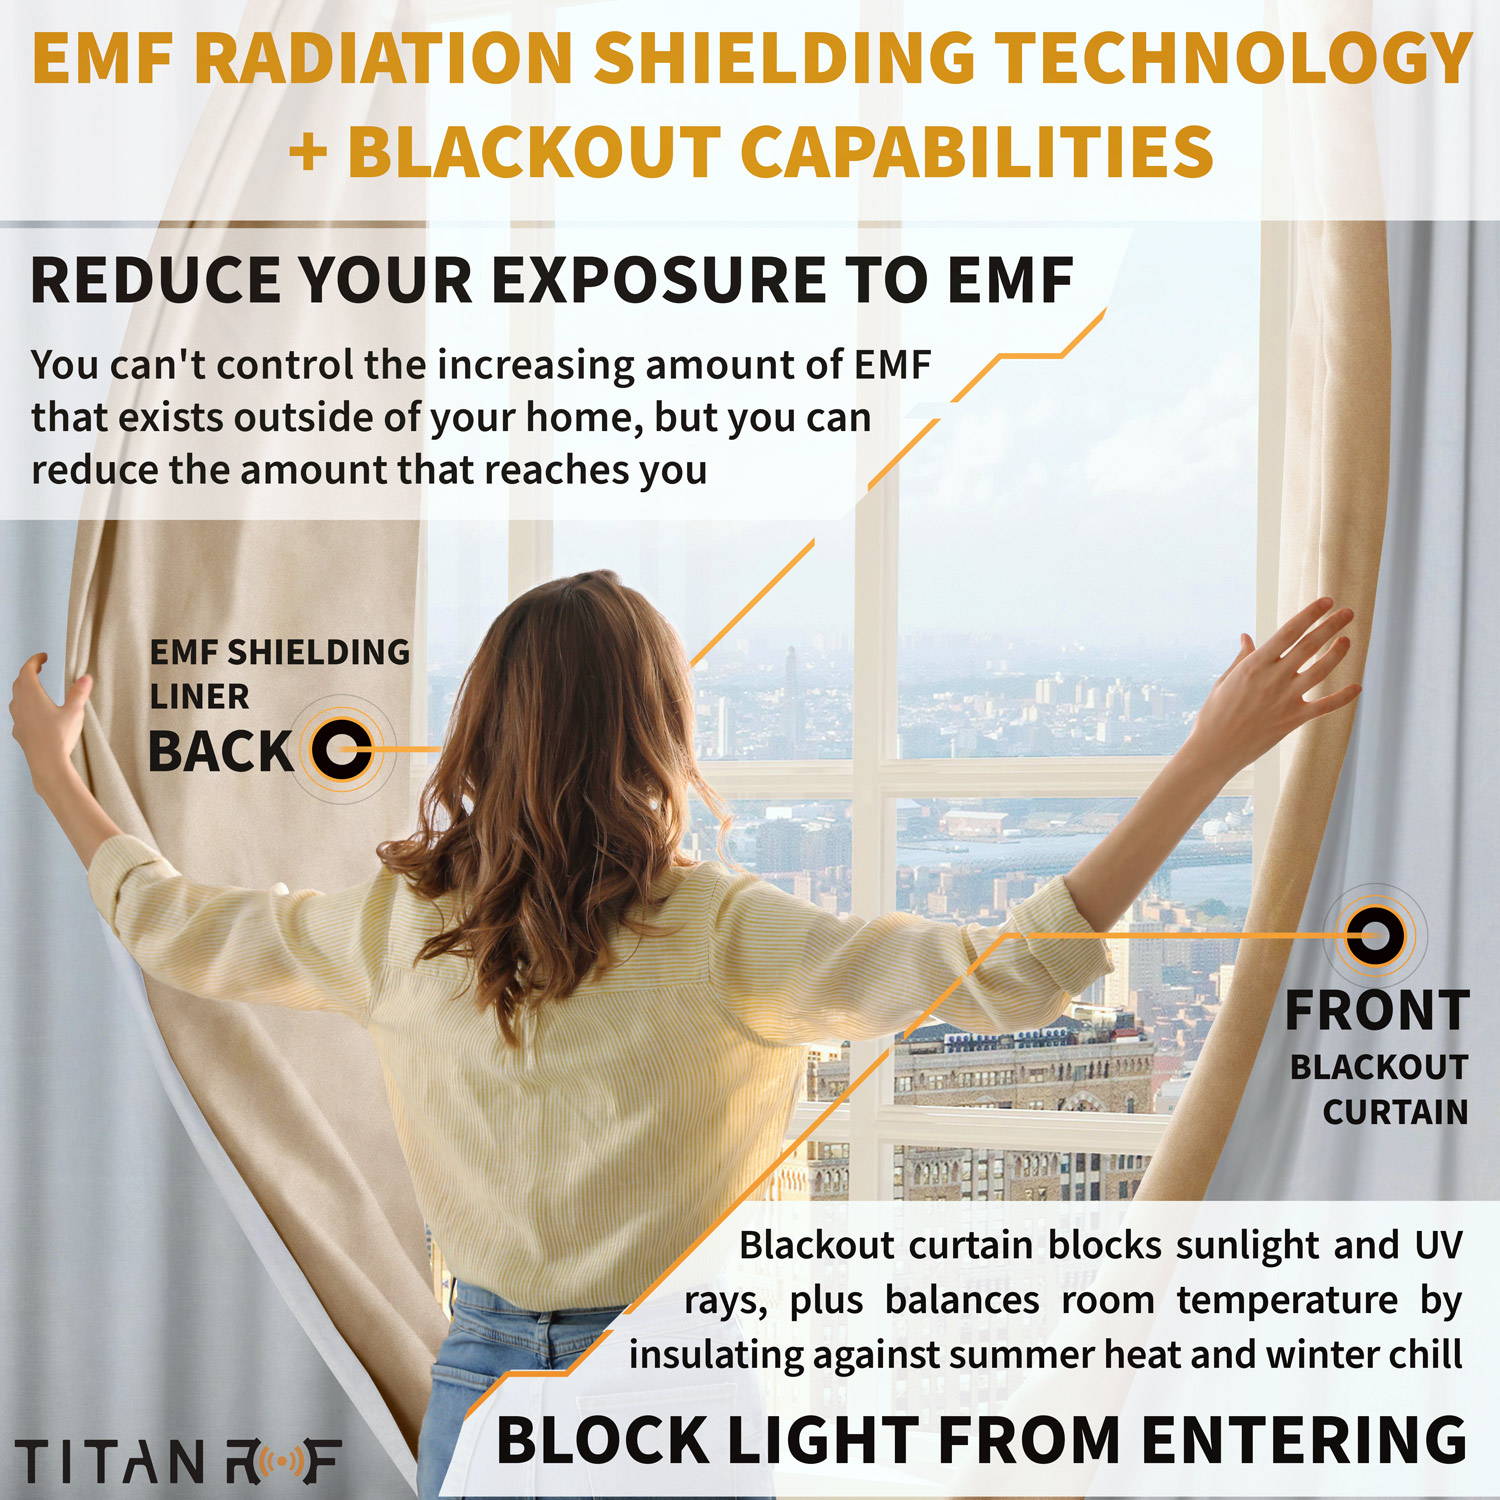 Mission DarknessTitanRF Radiation Shielding Blackout Curtain blocks all wireless signals and sunlight 